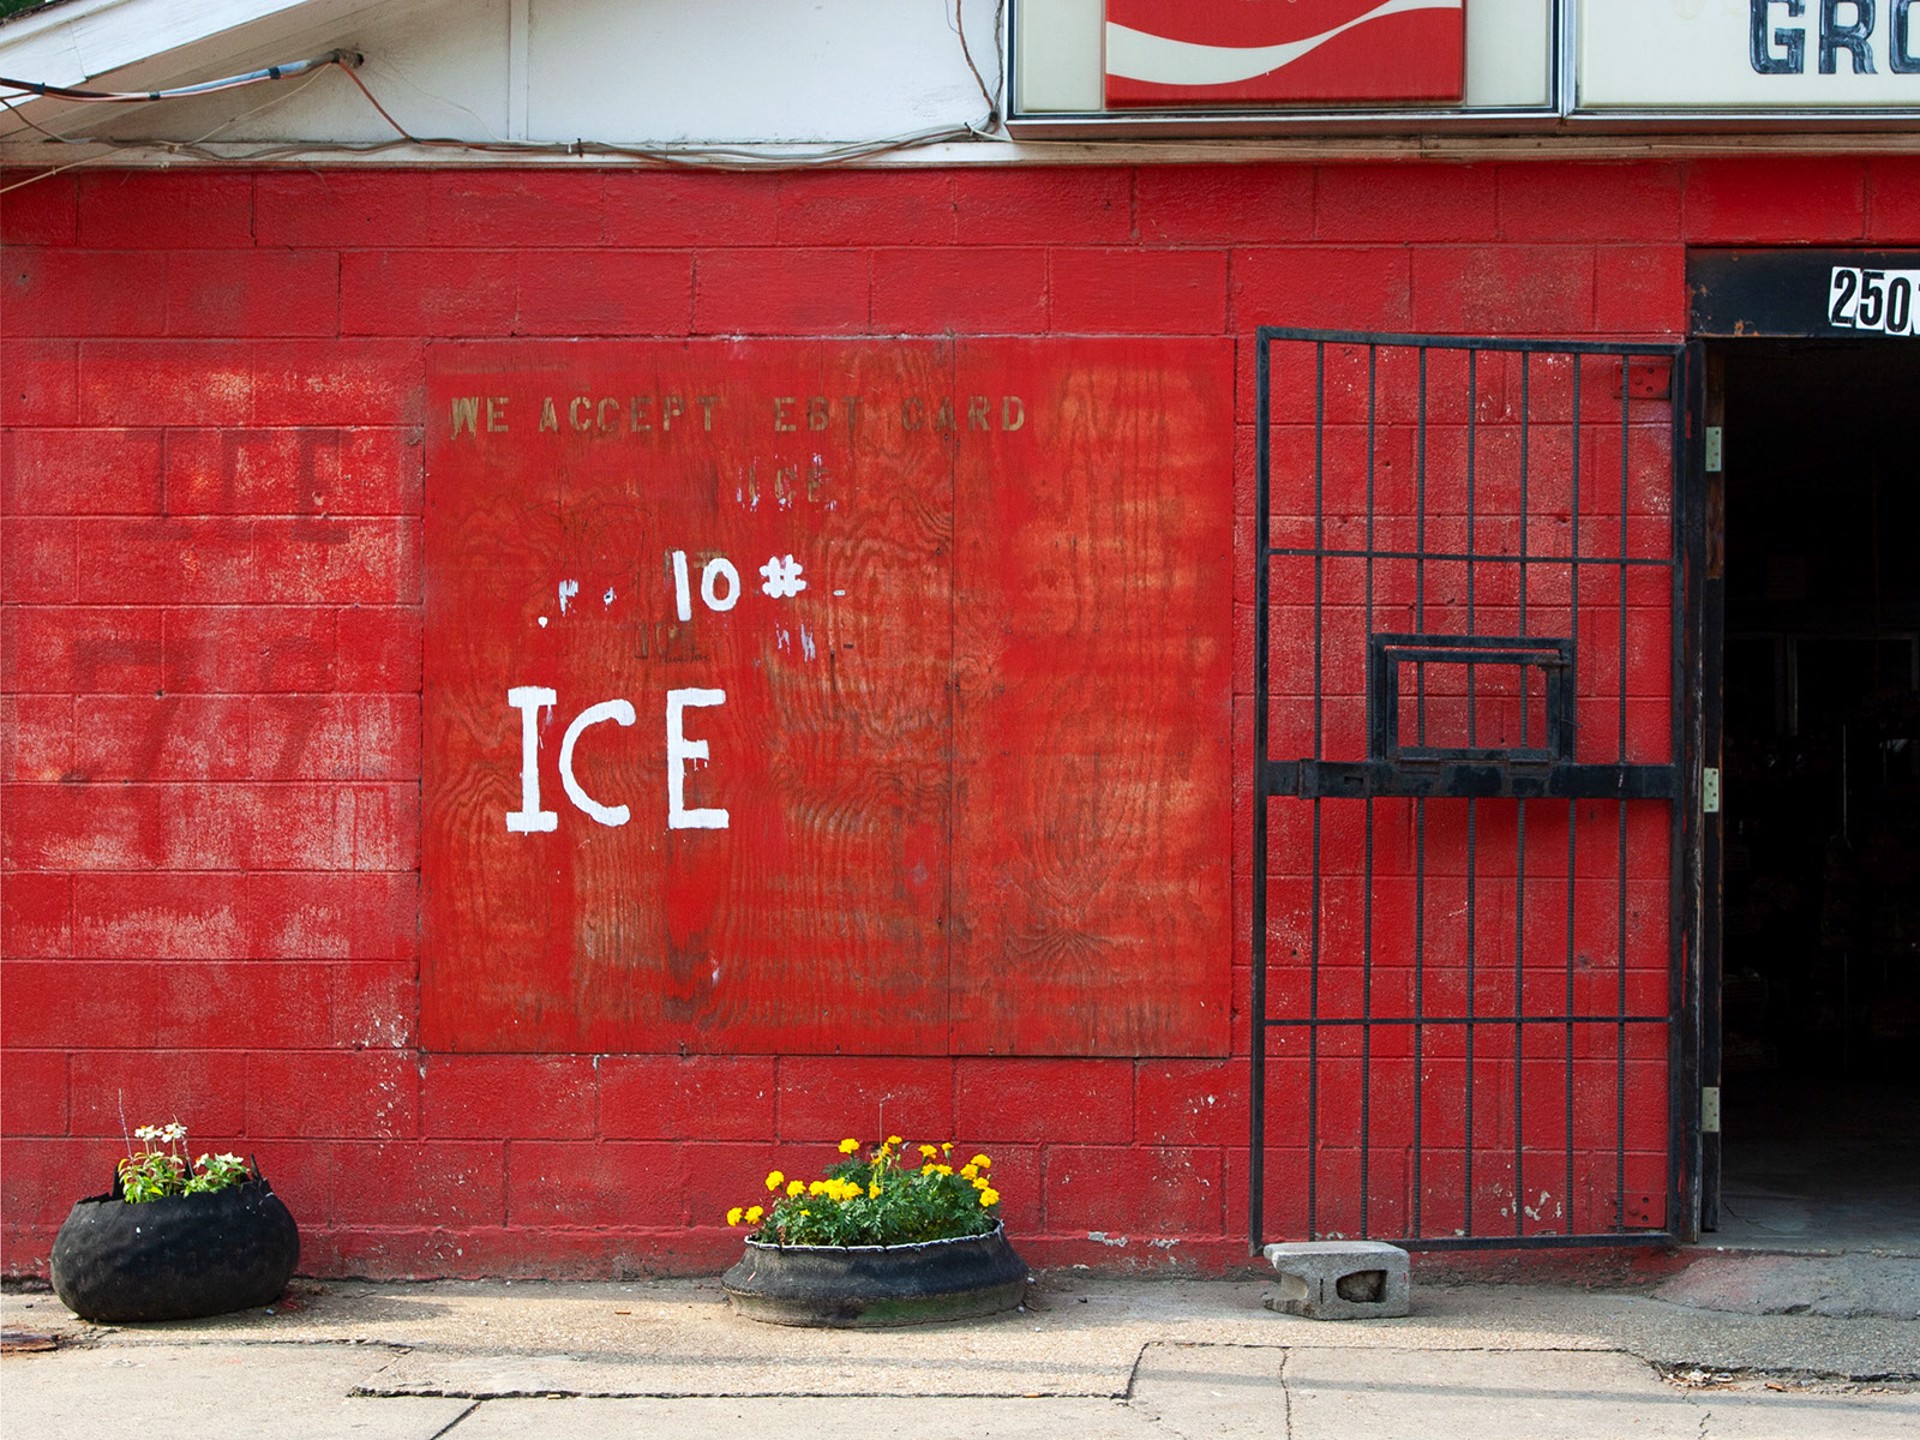 10#, ICE by Jerry Siegel